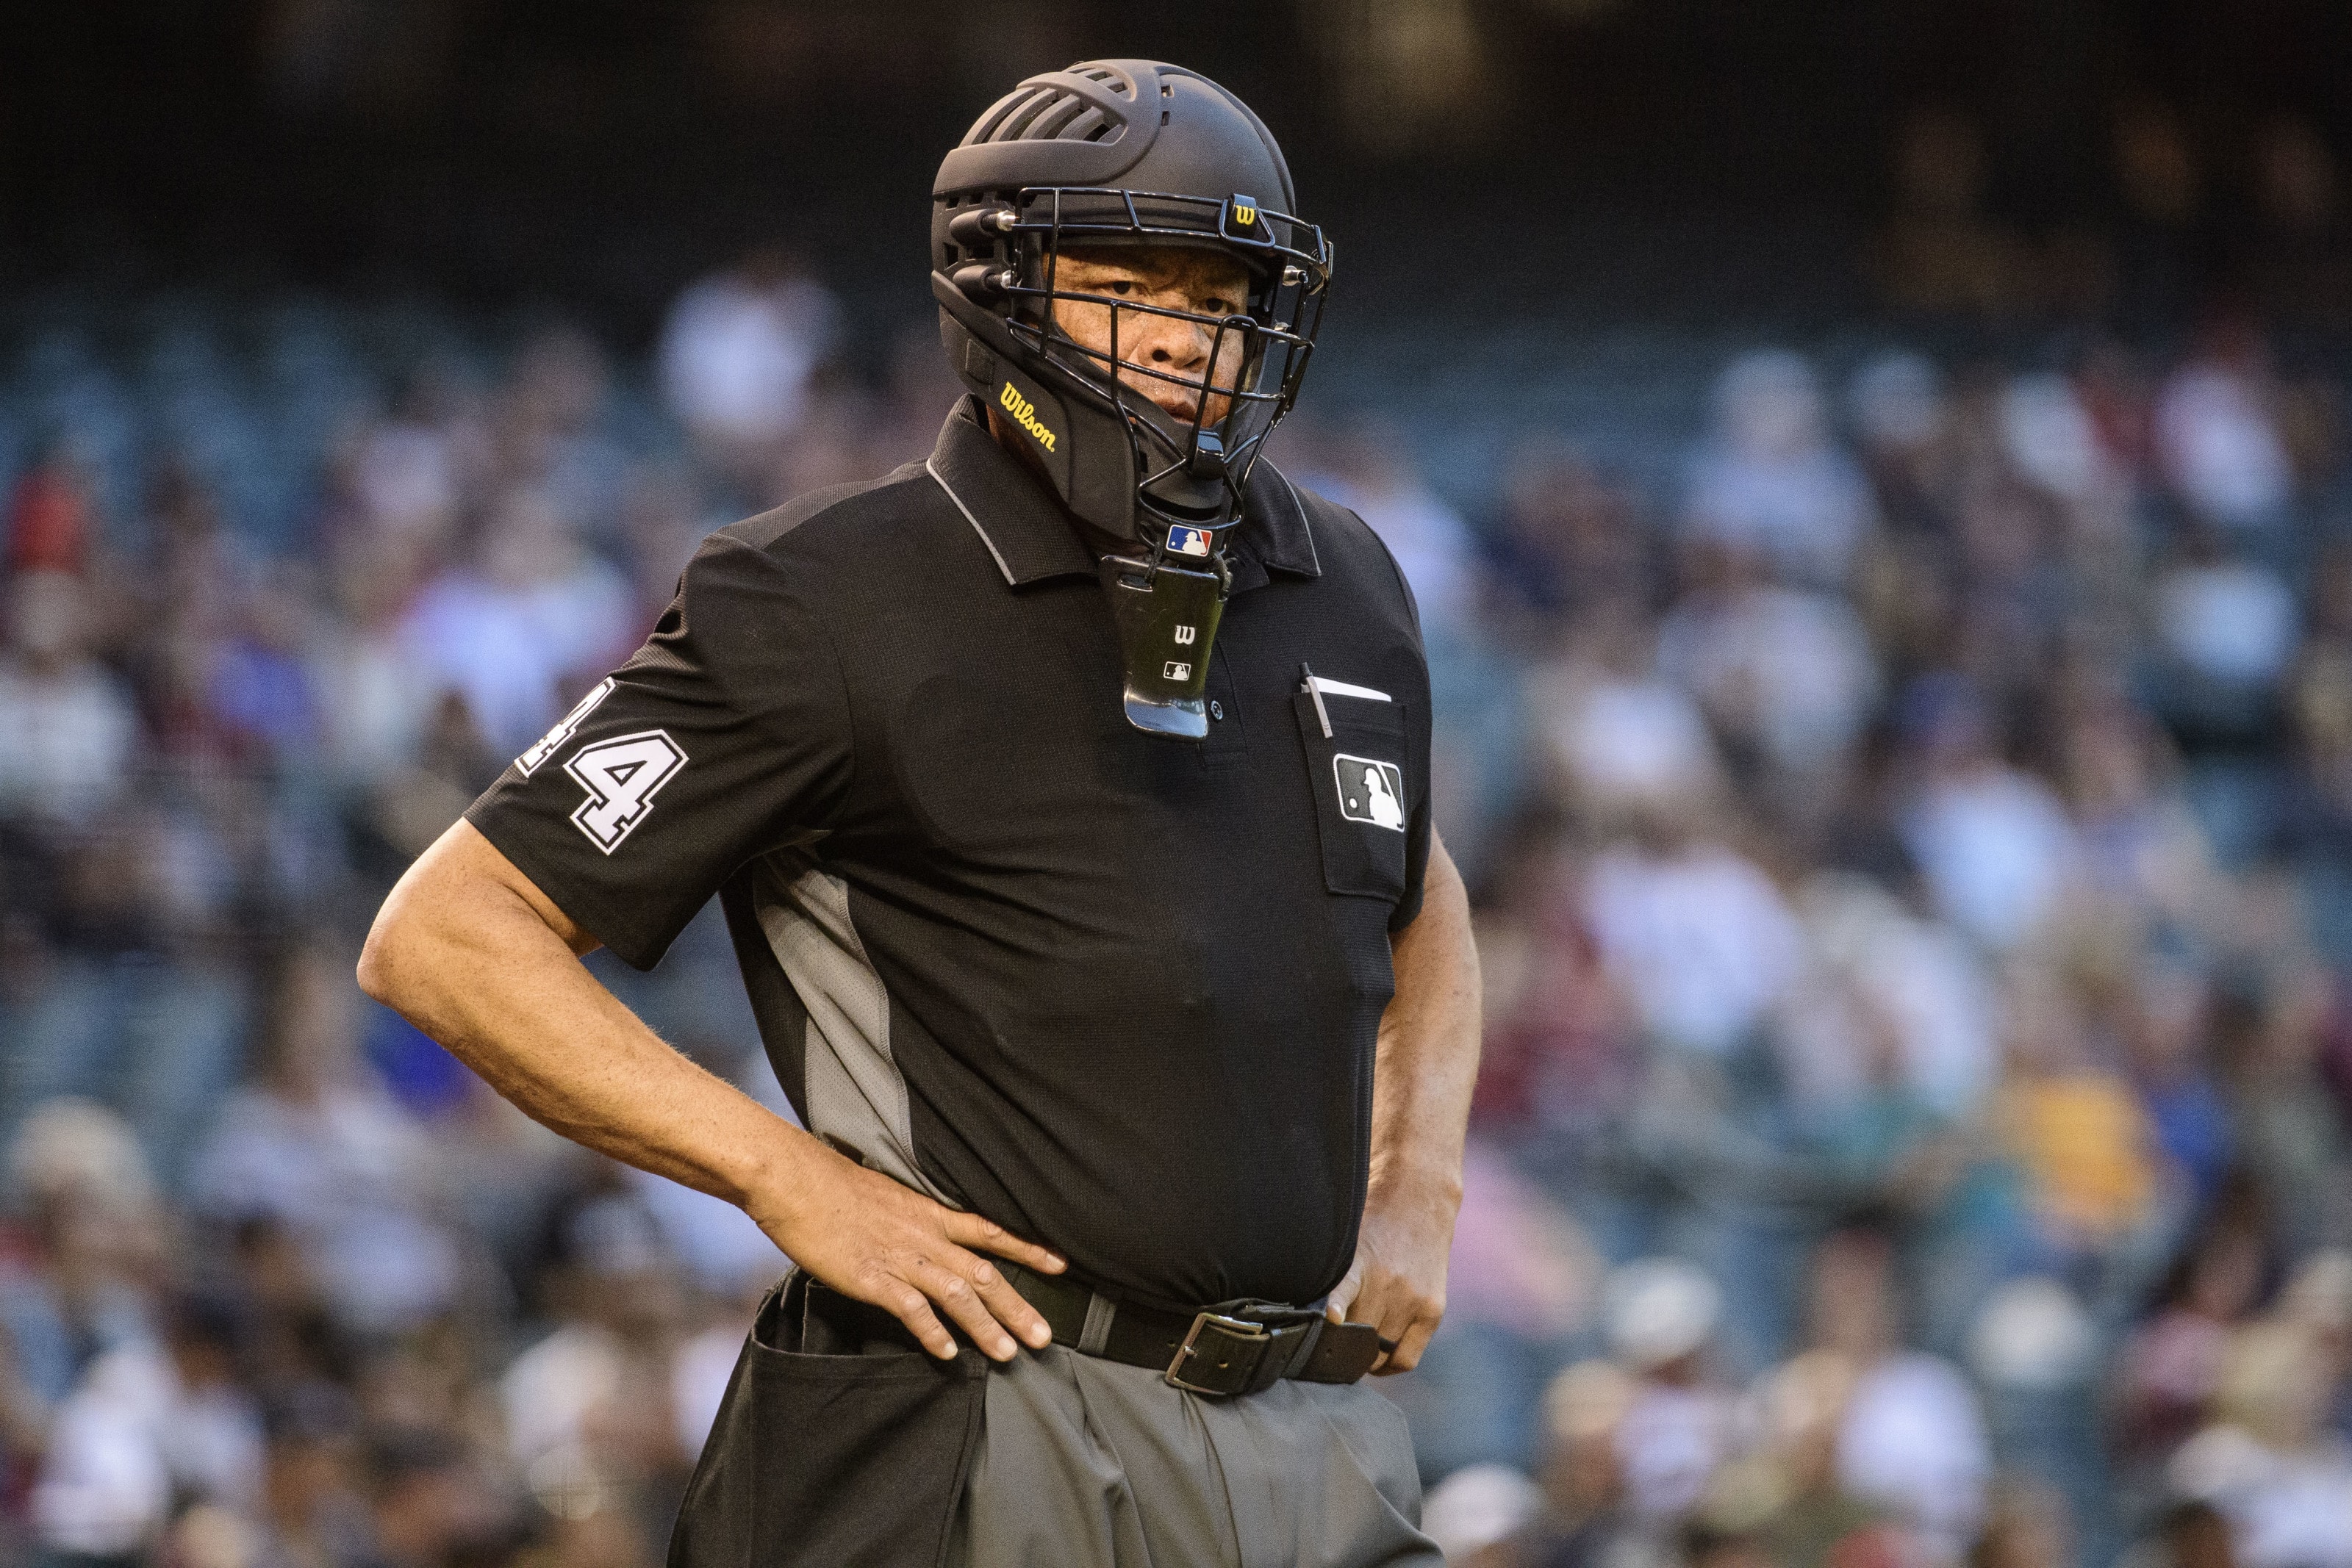 MLB appoints 1st black umpire crew chief